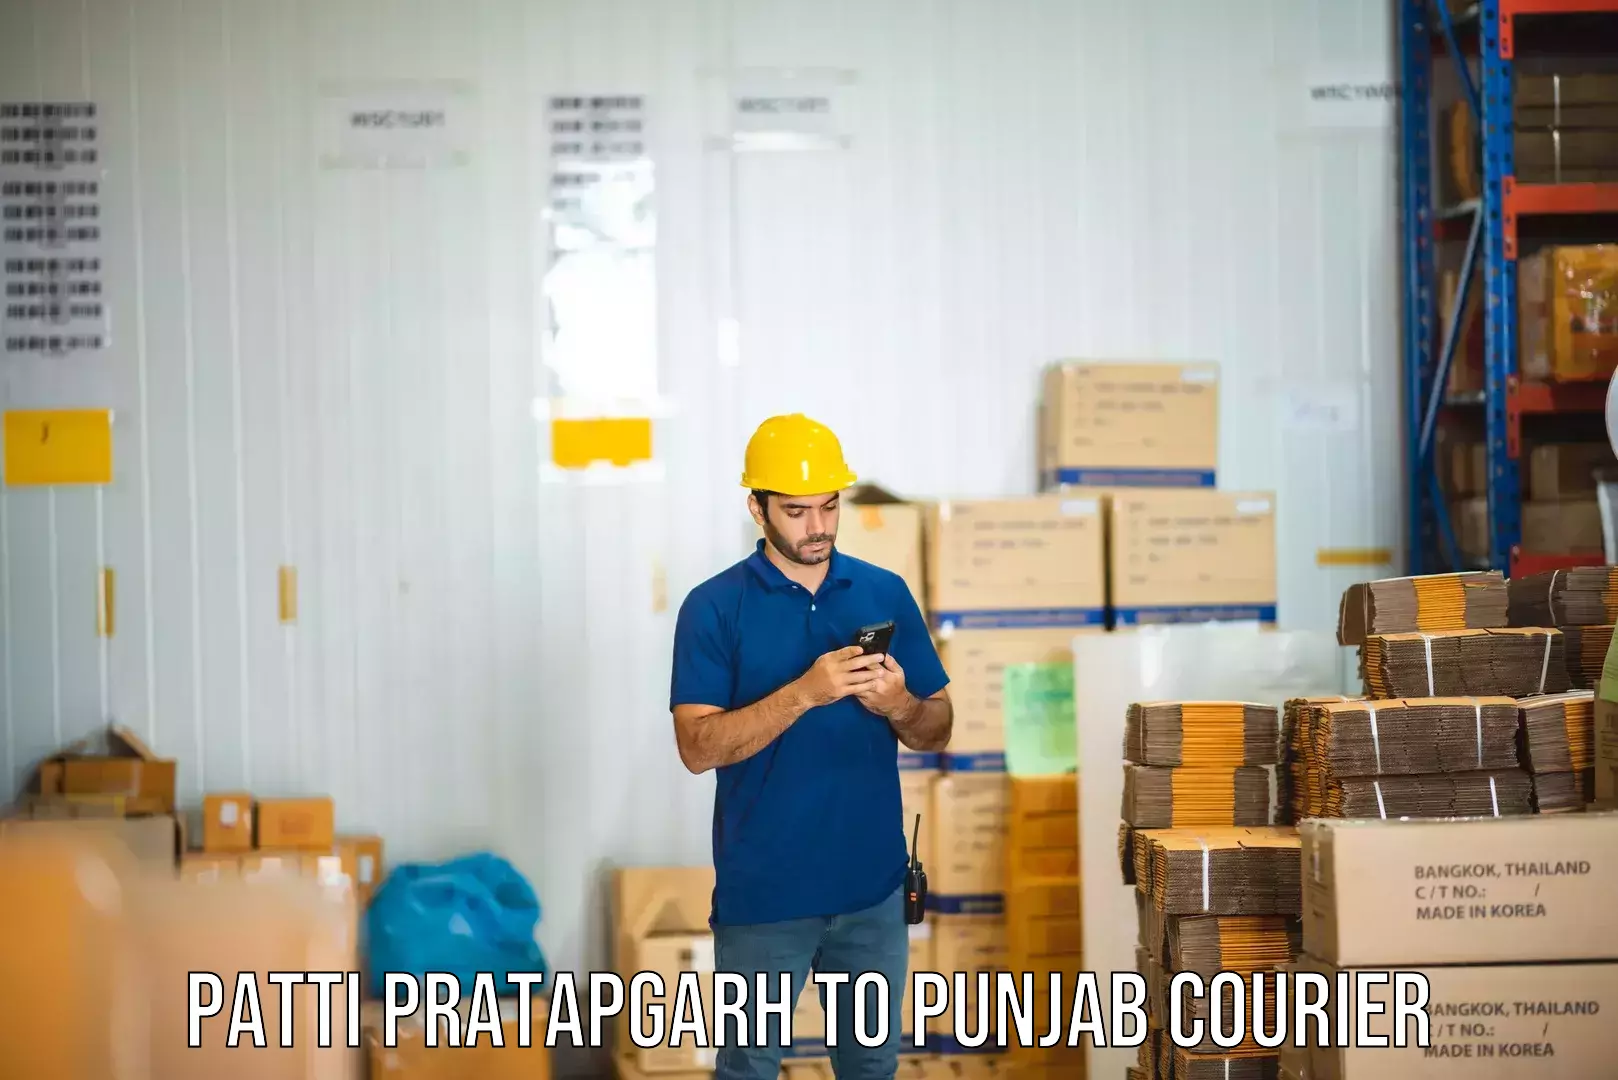 Same-day delivery options Patti Pratapgarh to Malout